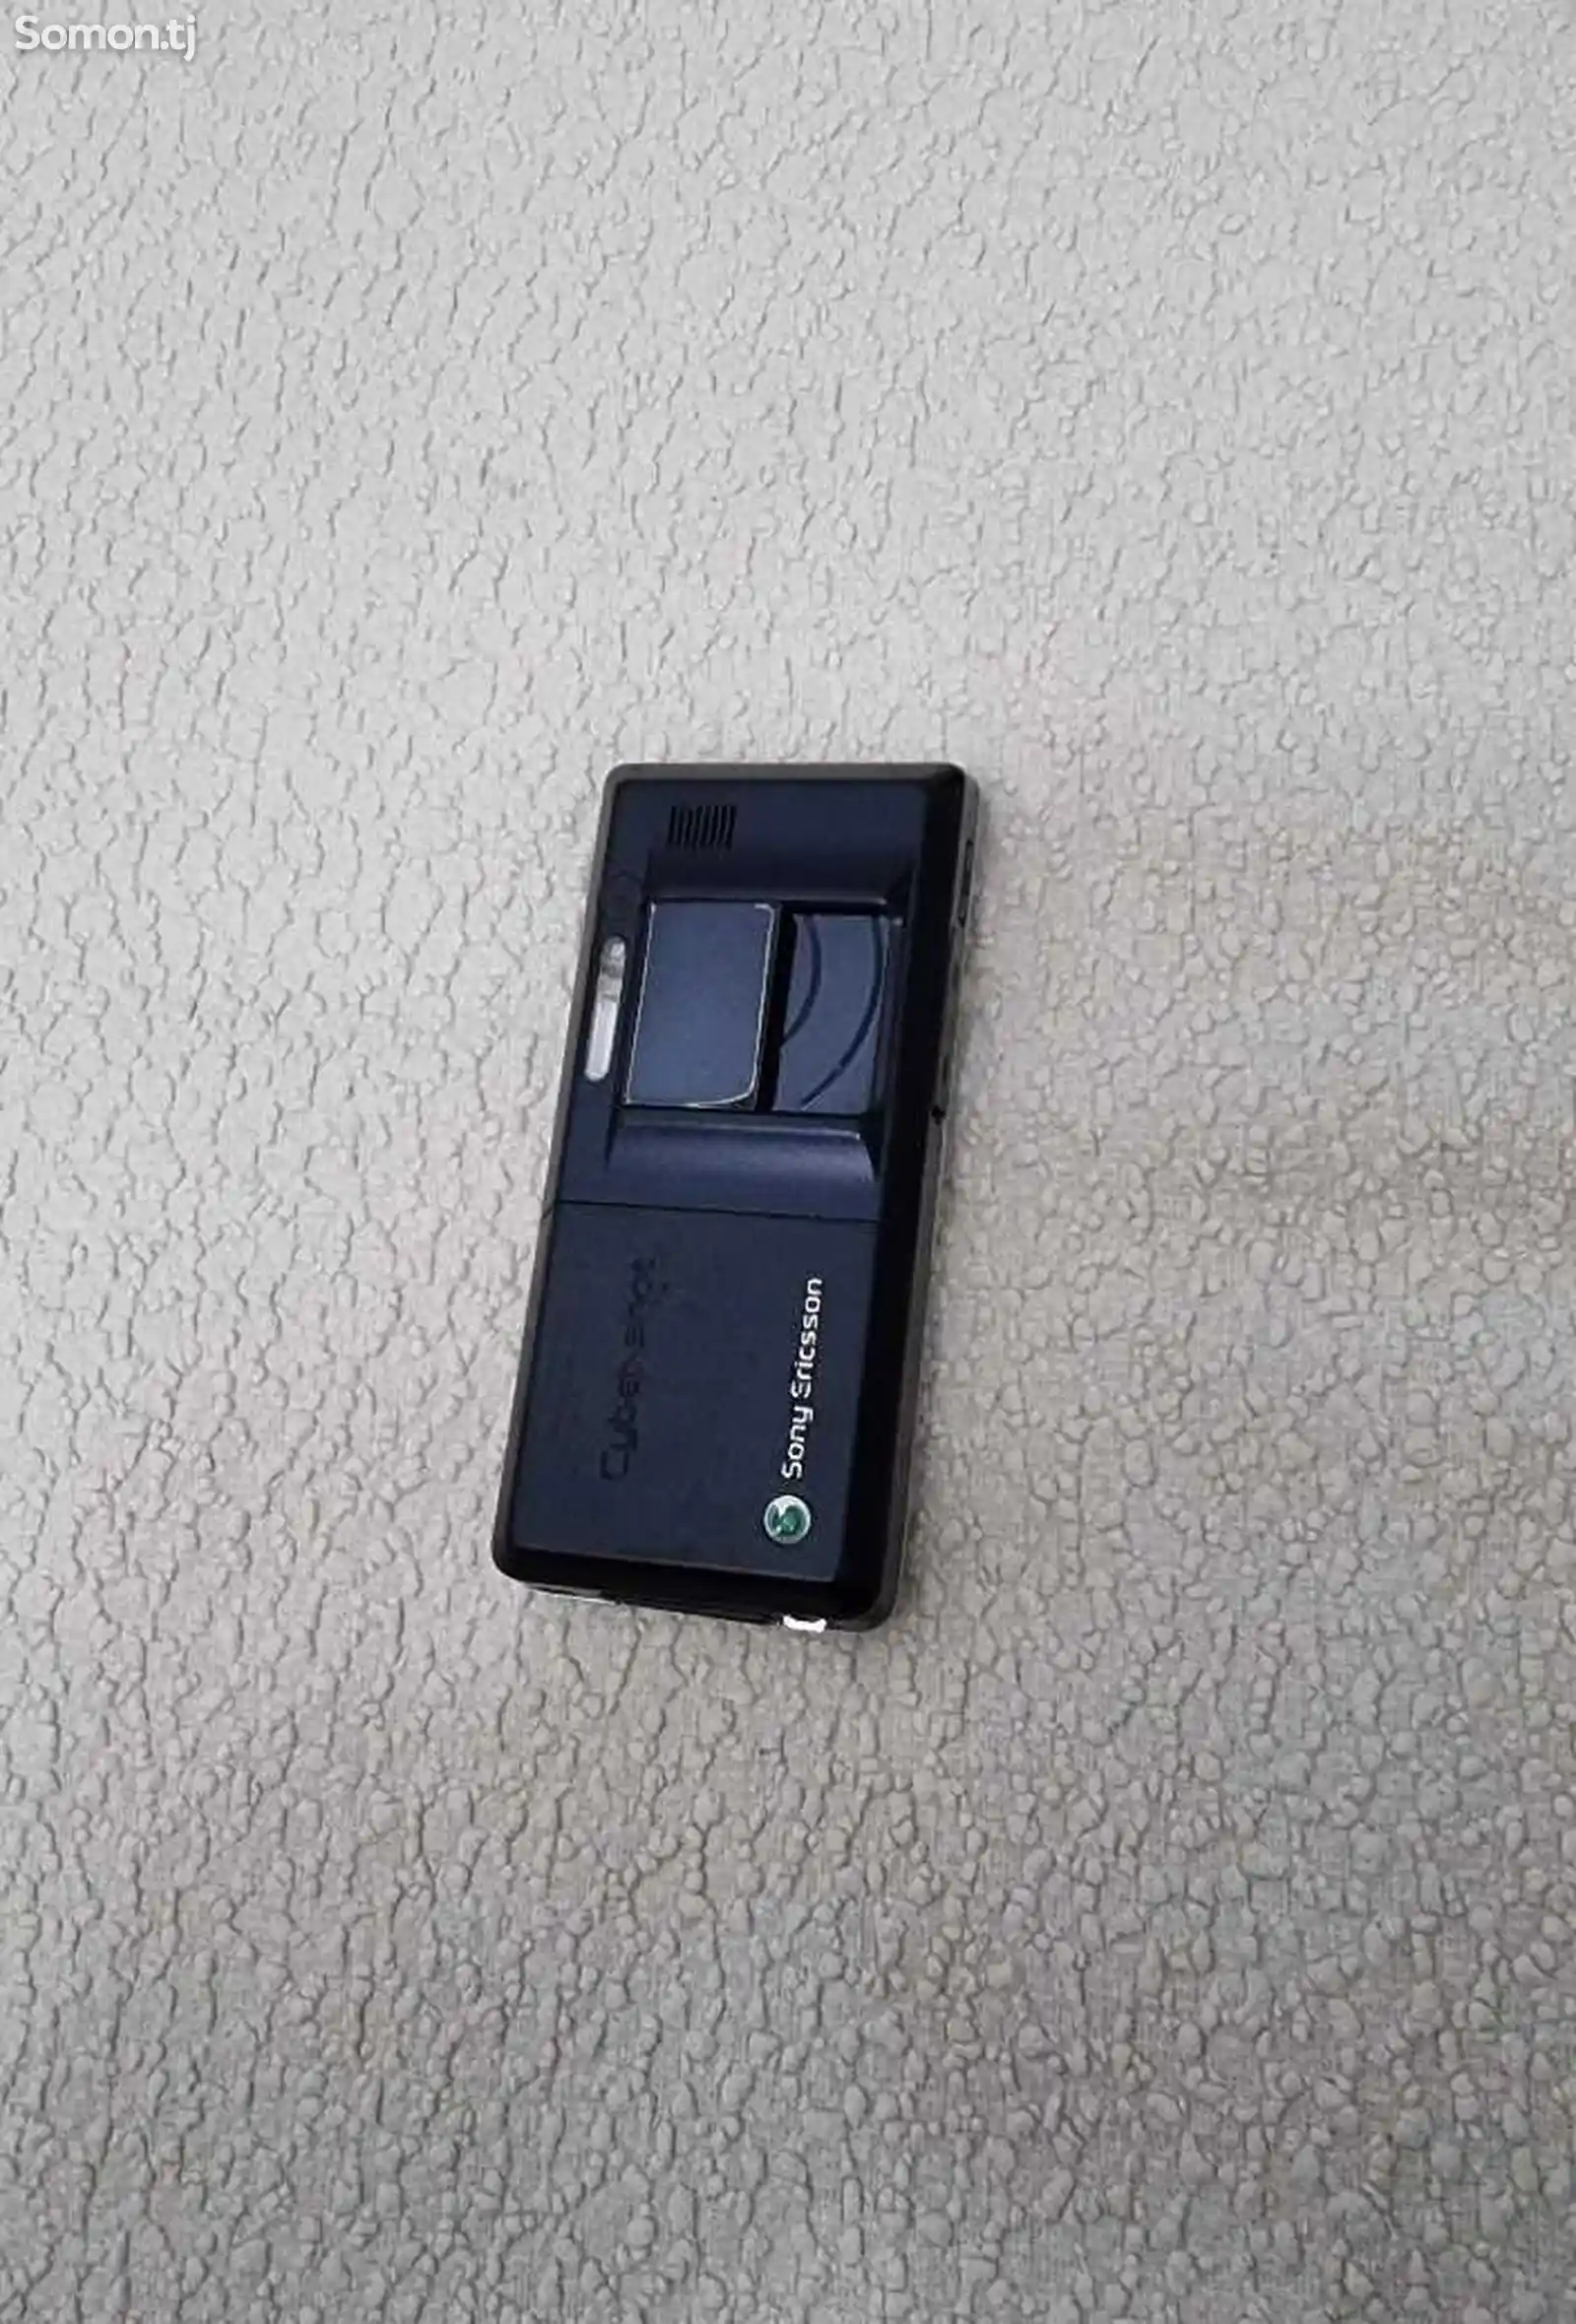 Sony Ericsson K810i-3